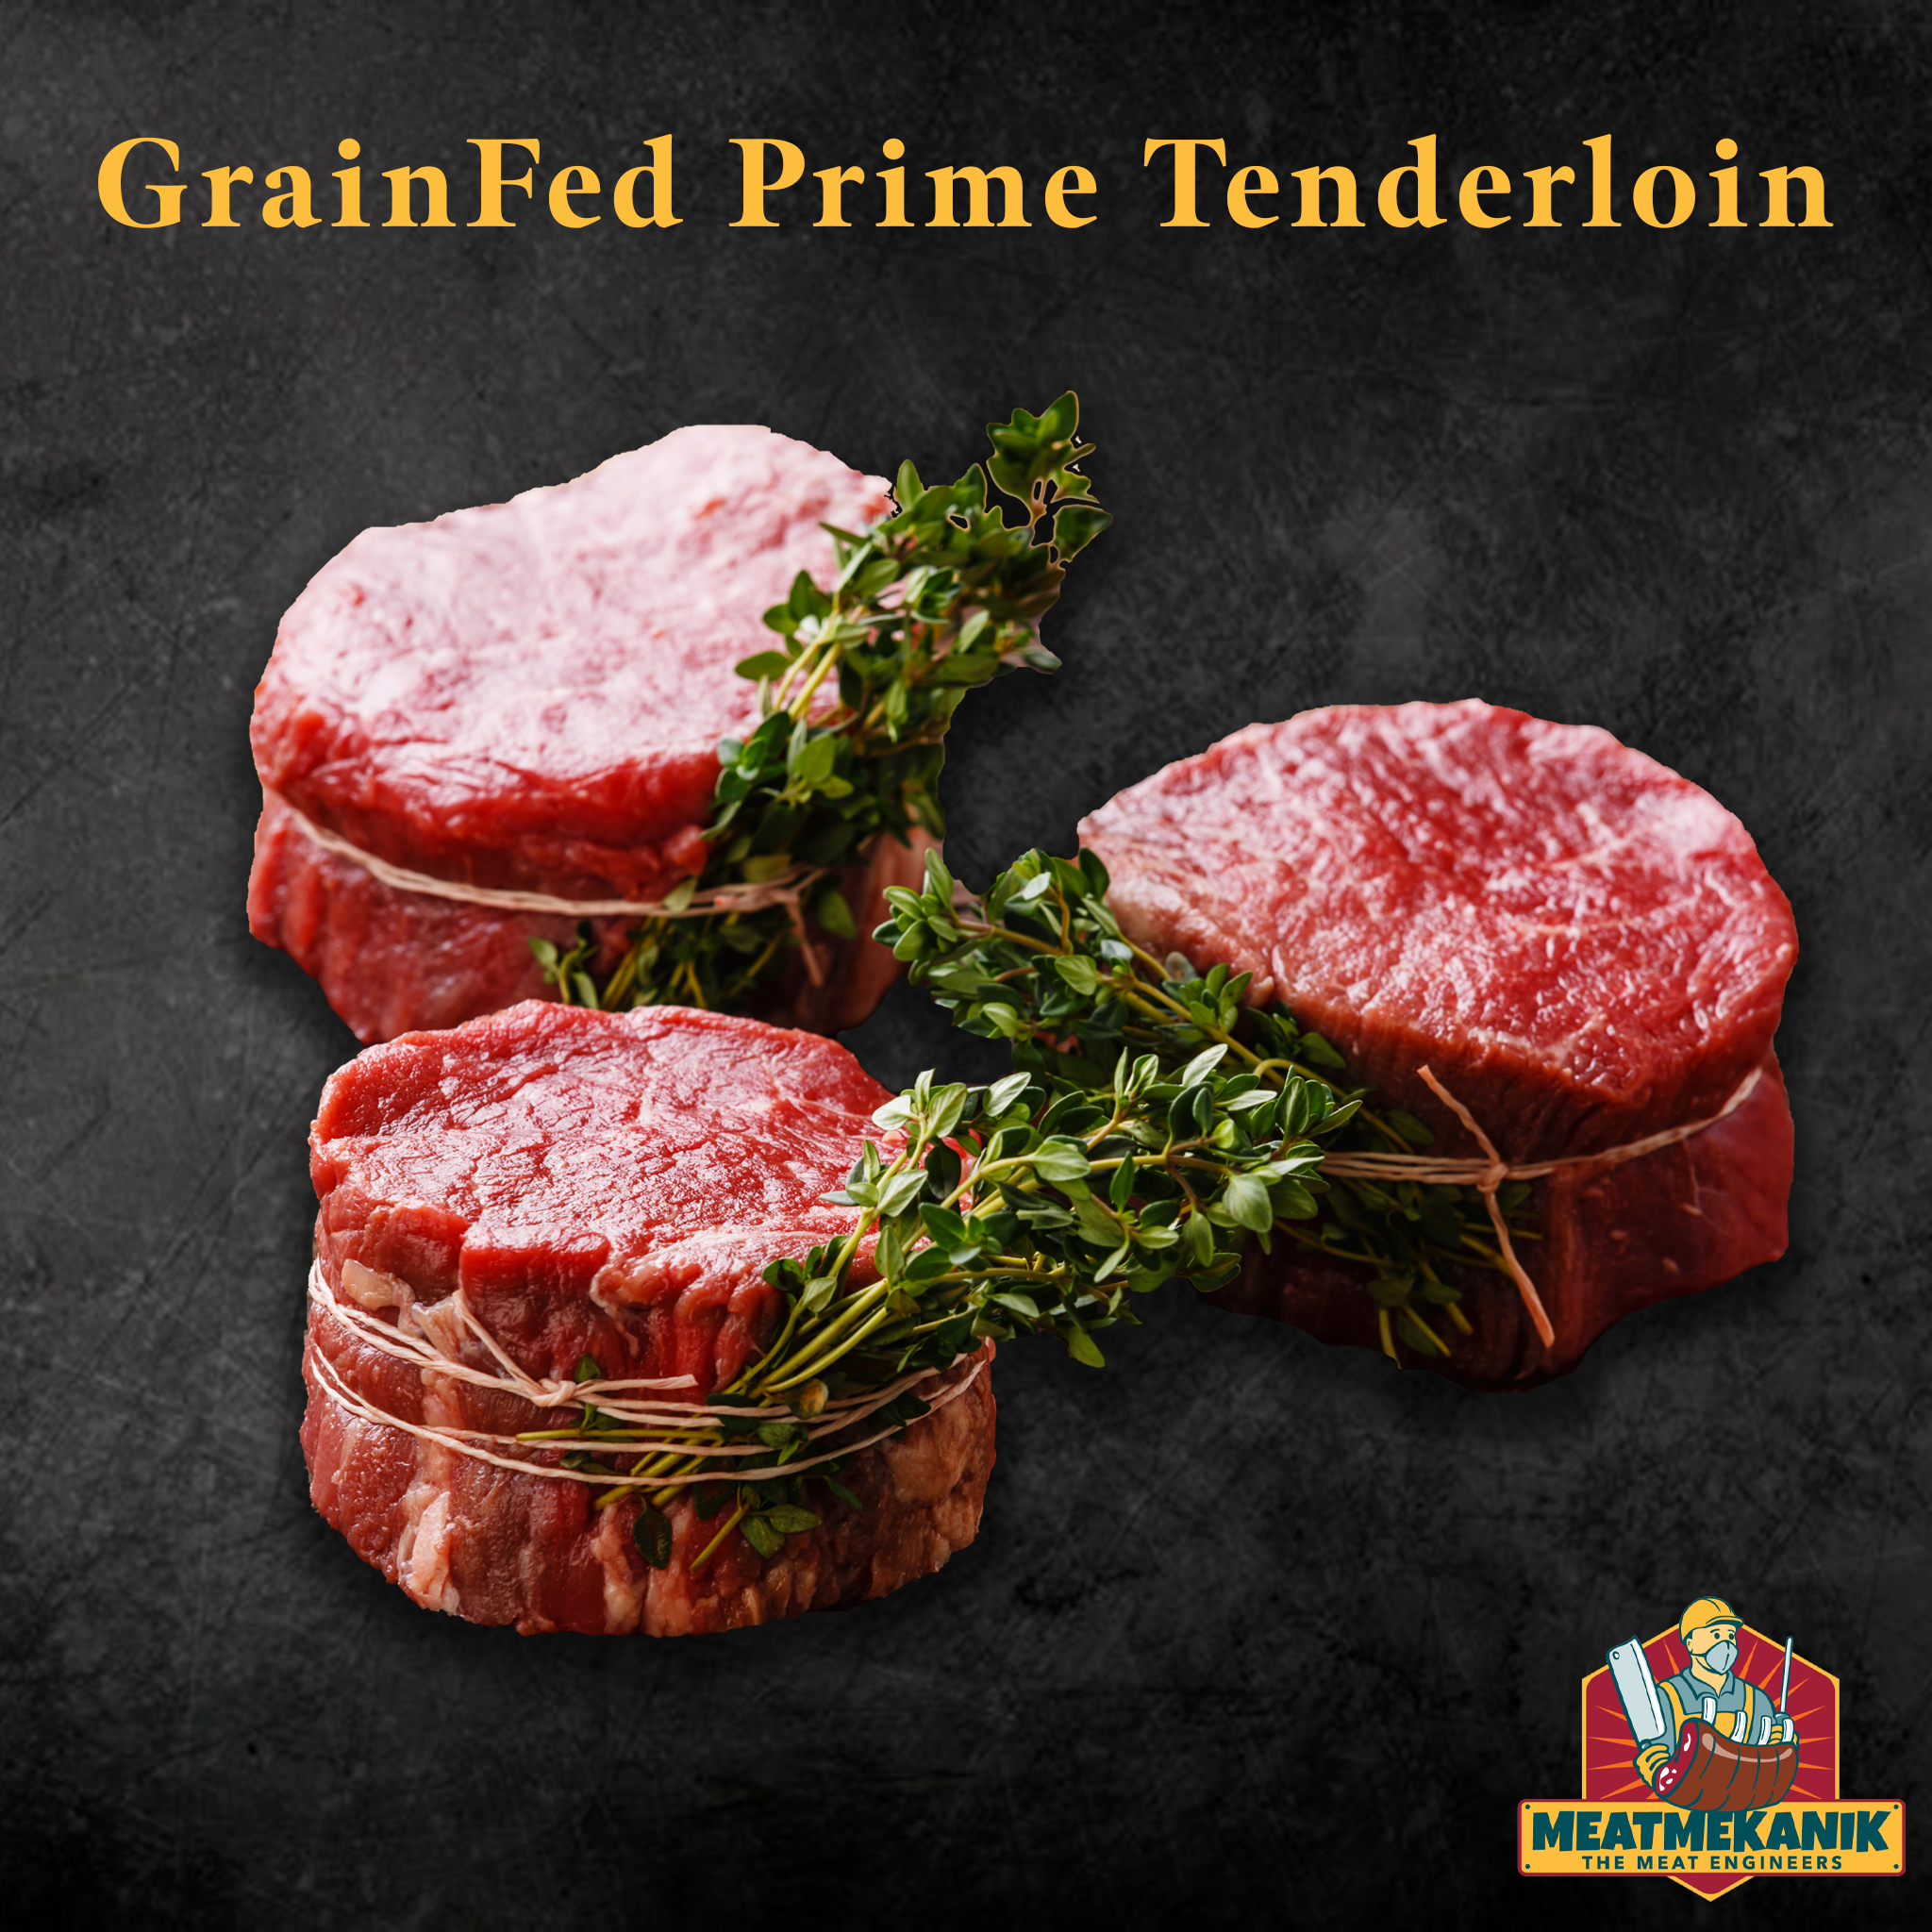 Grainfed Prime Tenderloin - Meat Mekanik